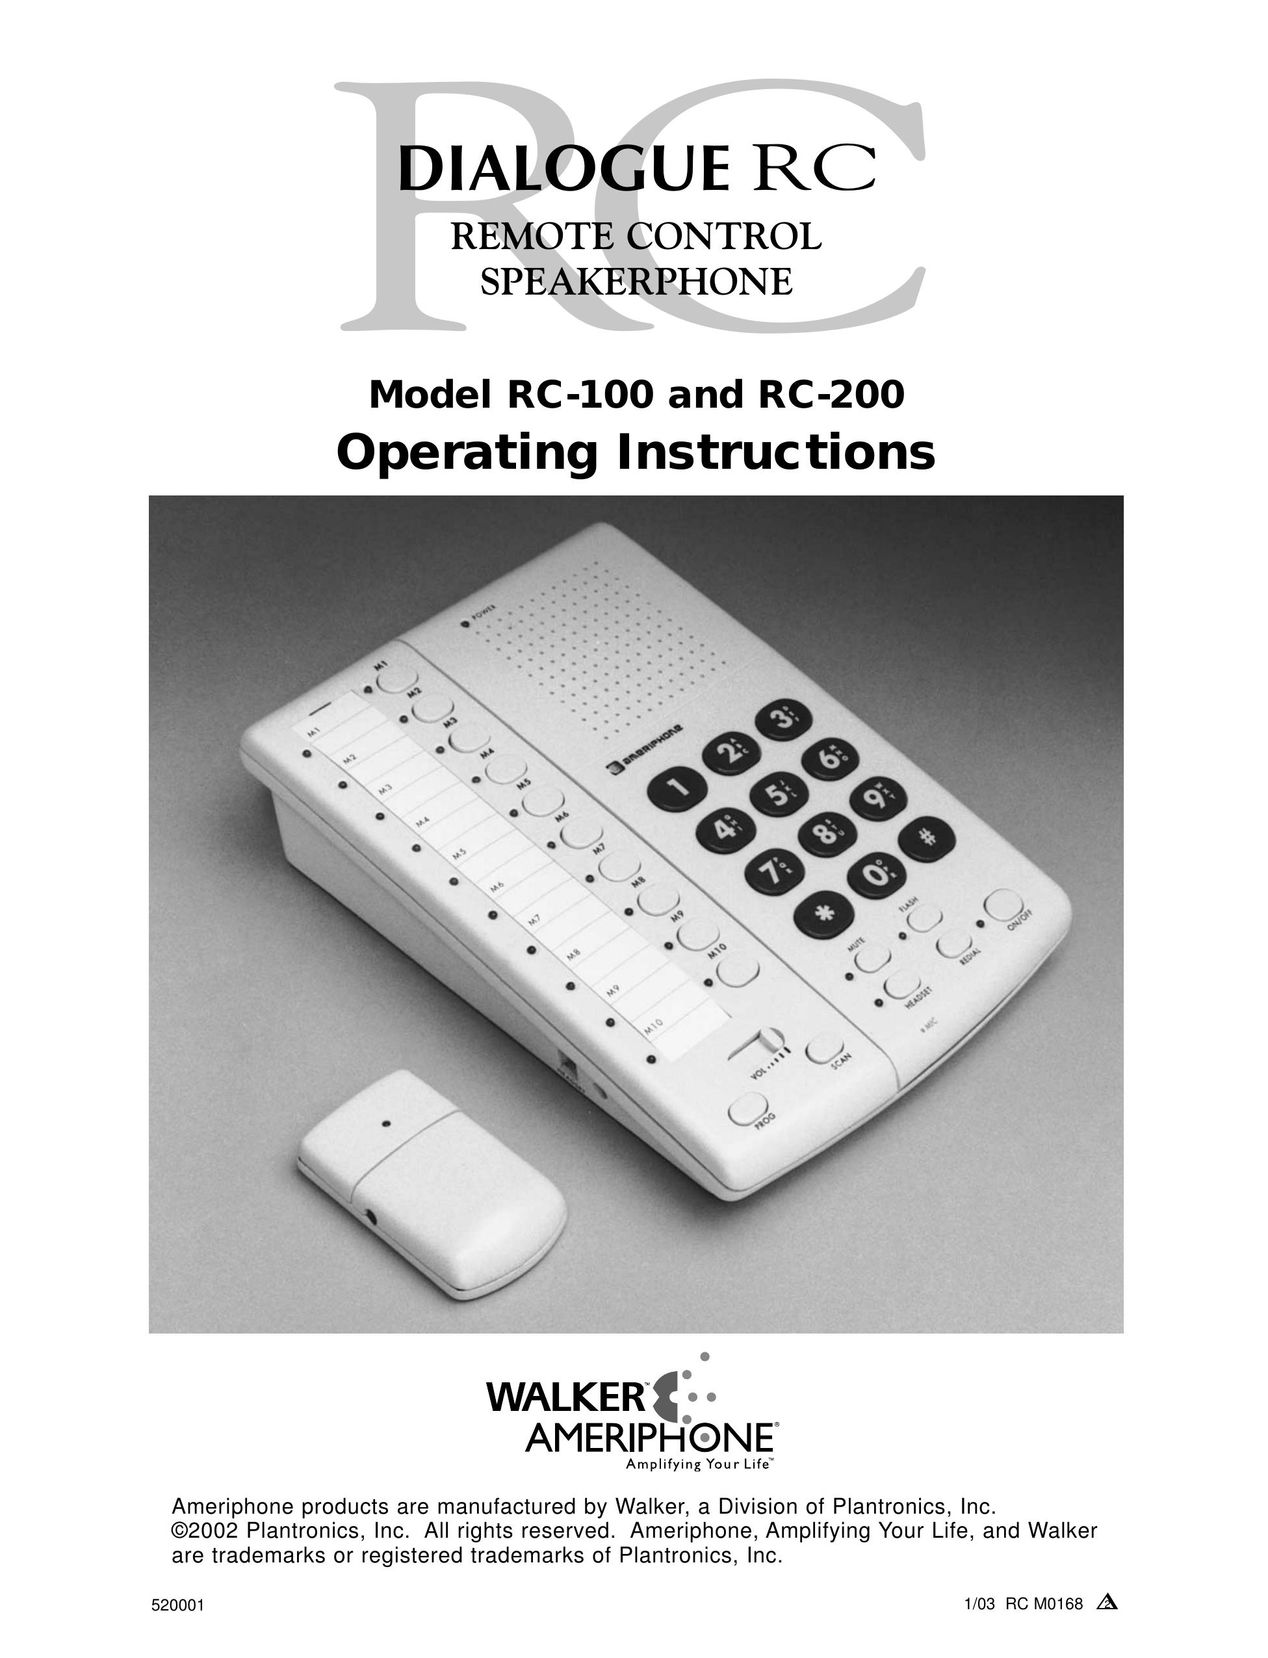 Ameriphone RC-200 Cordless Telephone User Manual